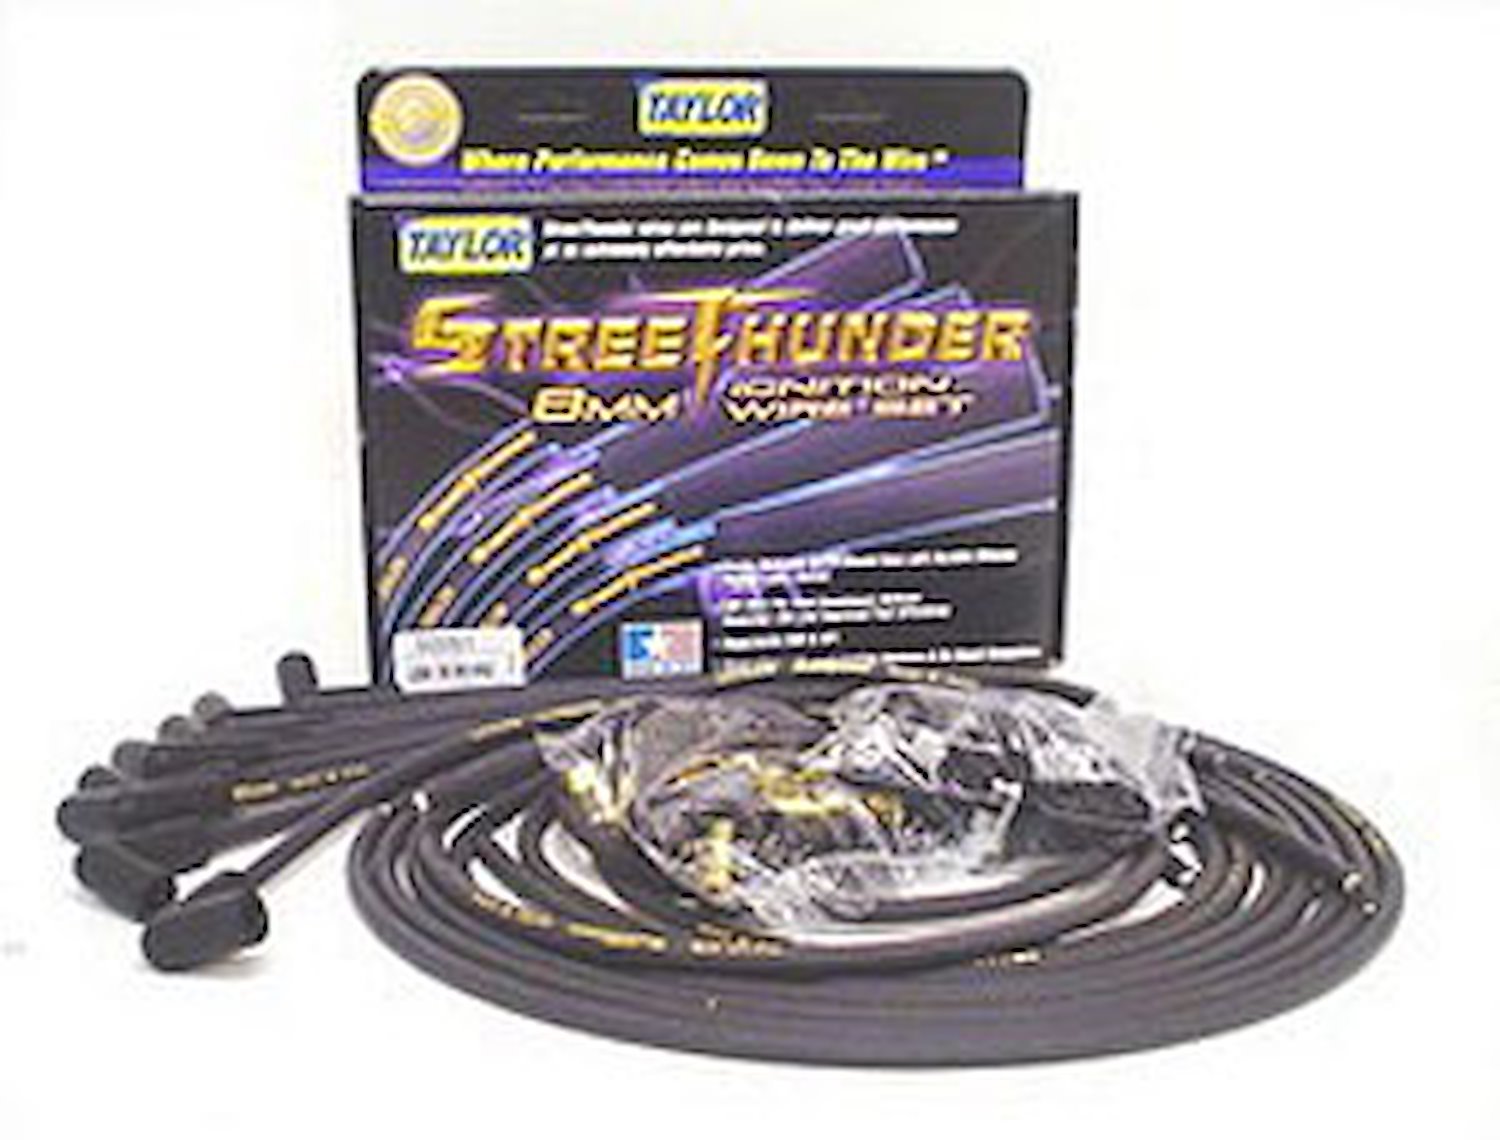 Street Thunder 8mm Spark Plug Wires Universal 8-Cylinder